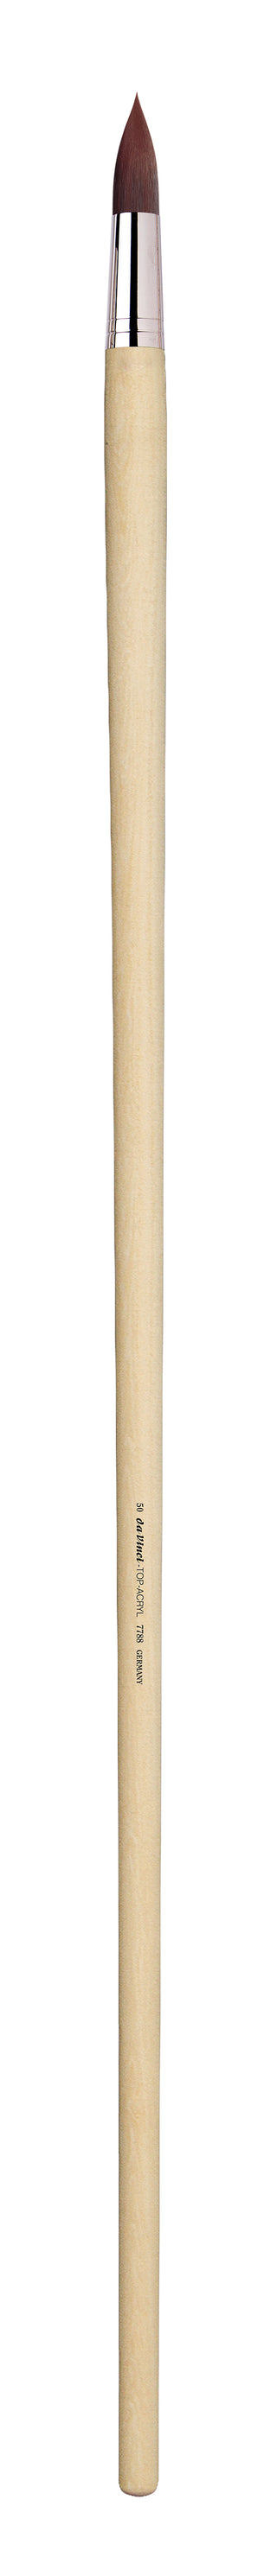 Da Vinci TOP-ACRYL Series 7788  Synthetic Round Brush - 100cm Handle